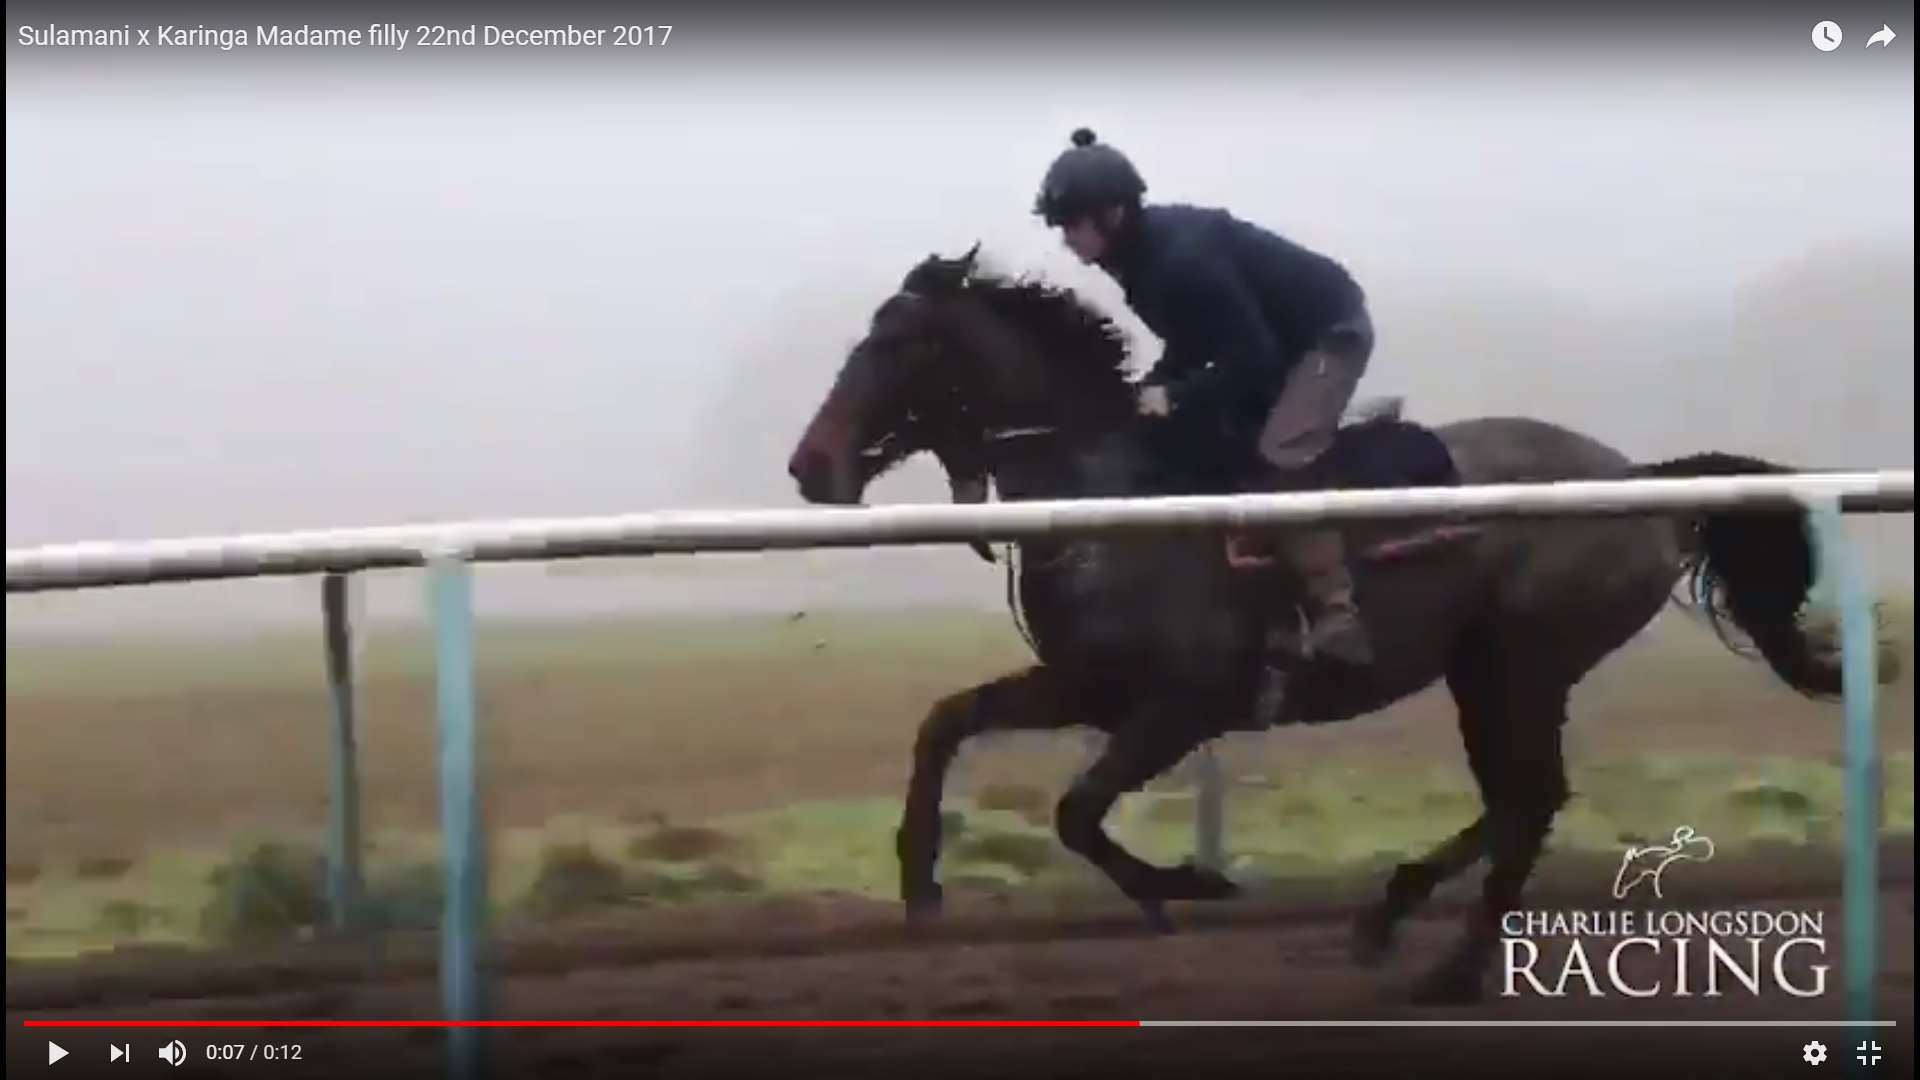 Sulamani x Karinga Madame on the gallops 22nd December 2017